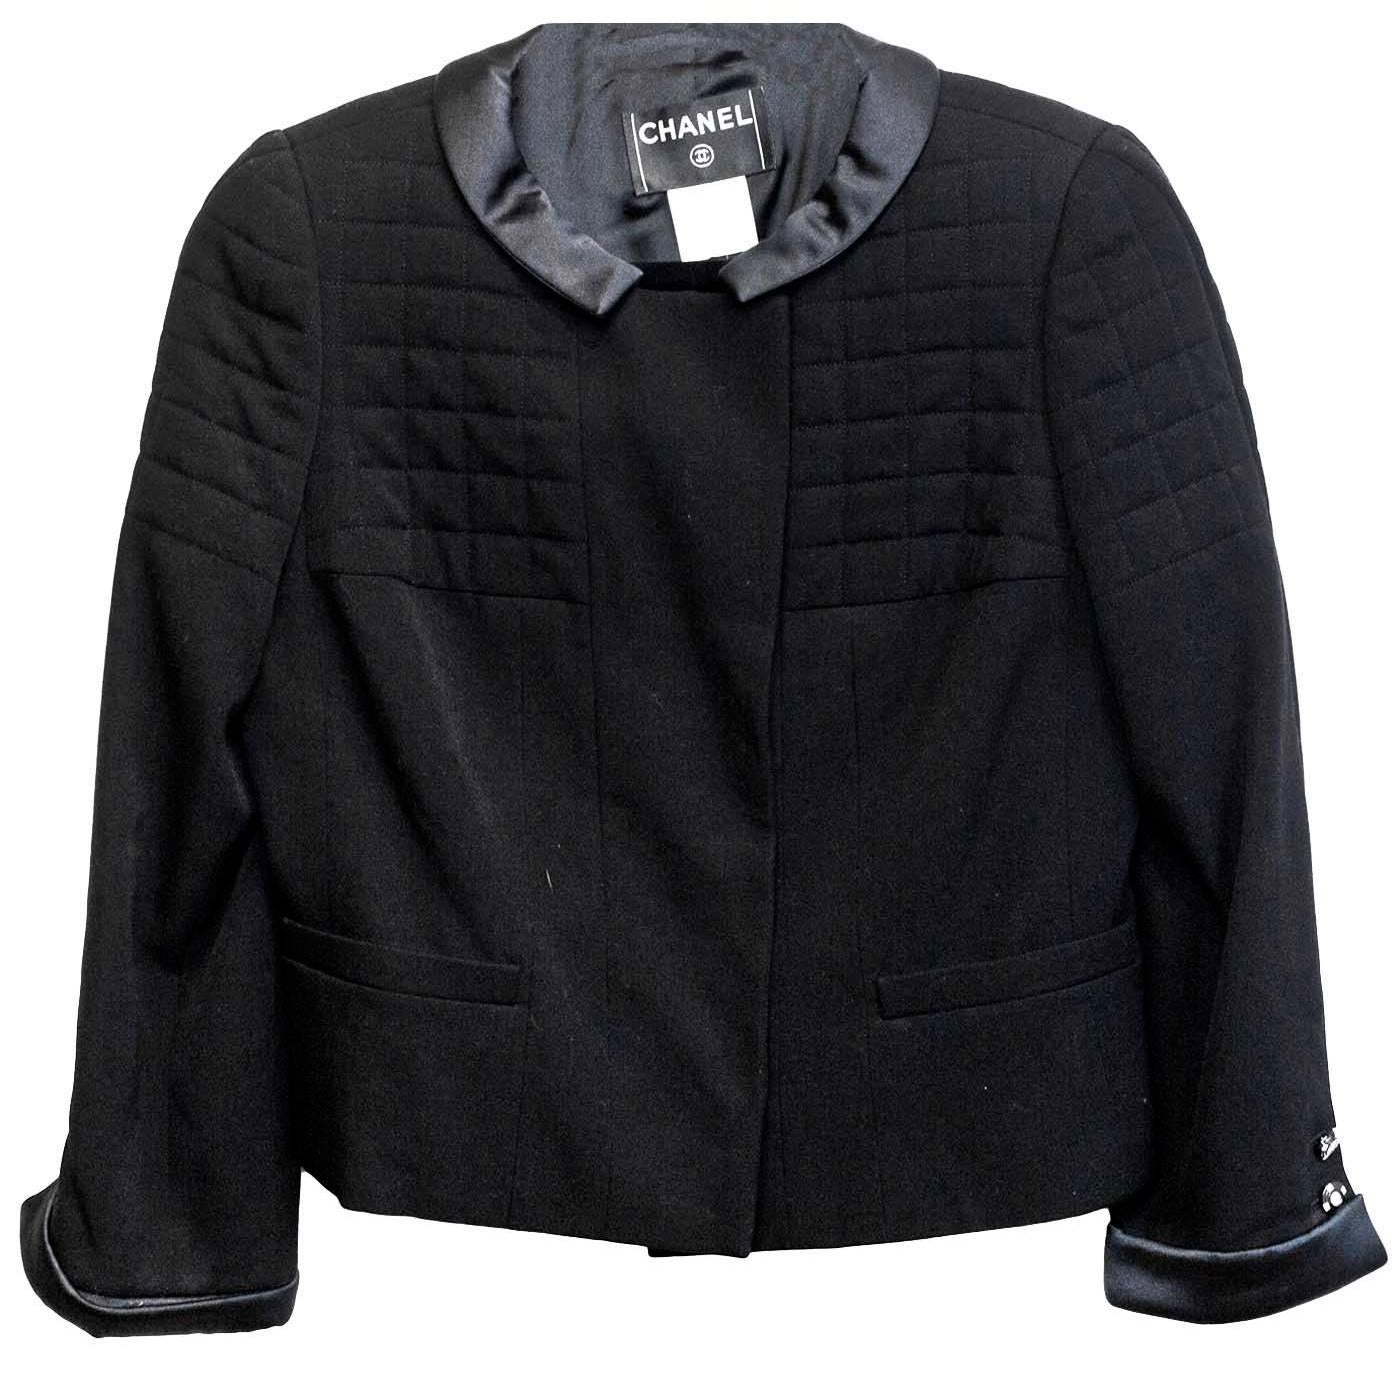 Chanel Black Wool Jacket with Sateen Trim Sz 44